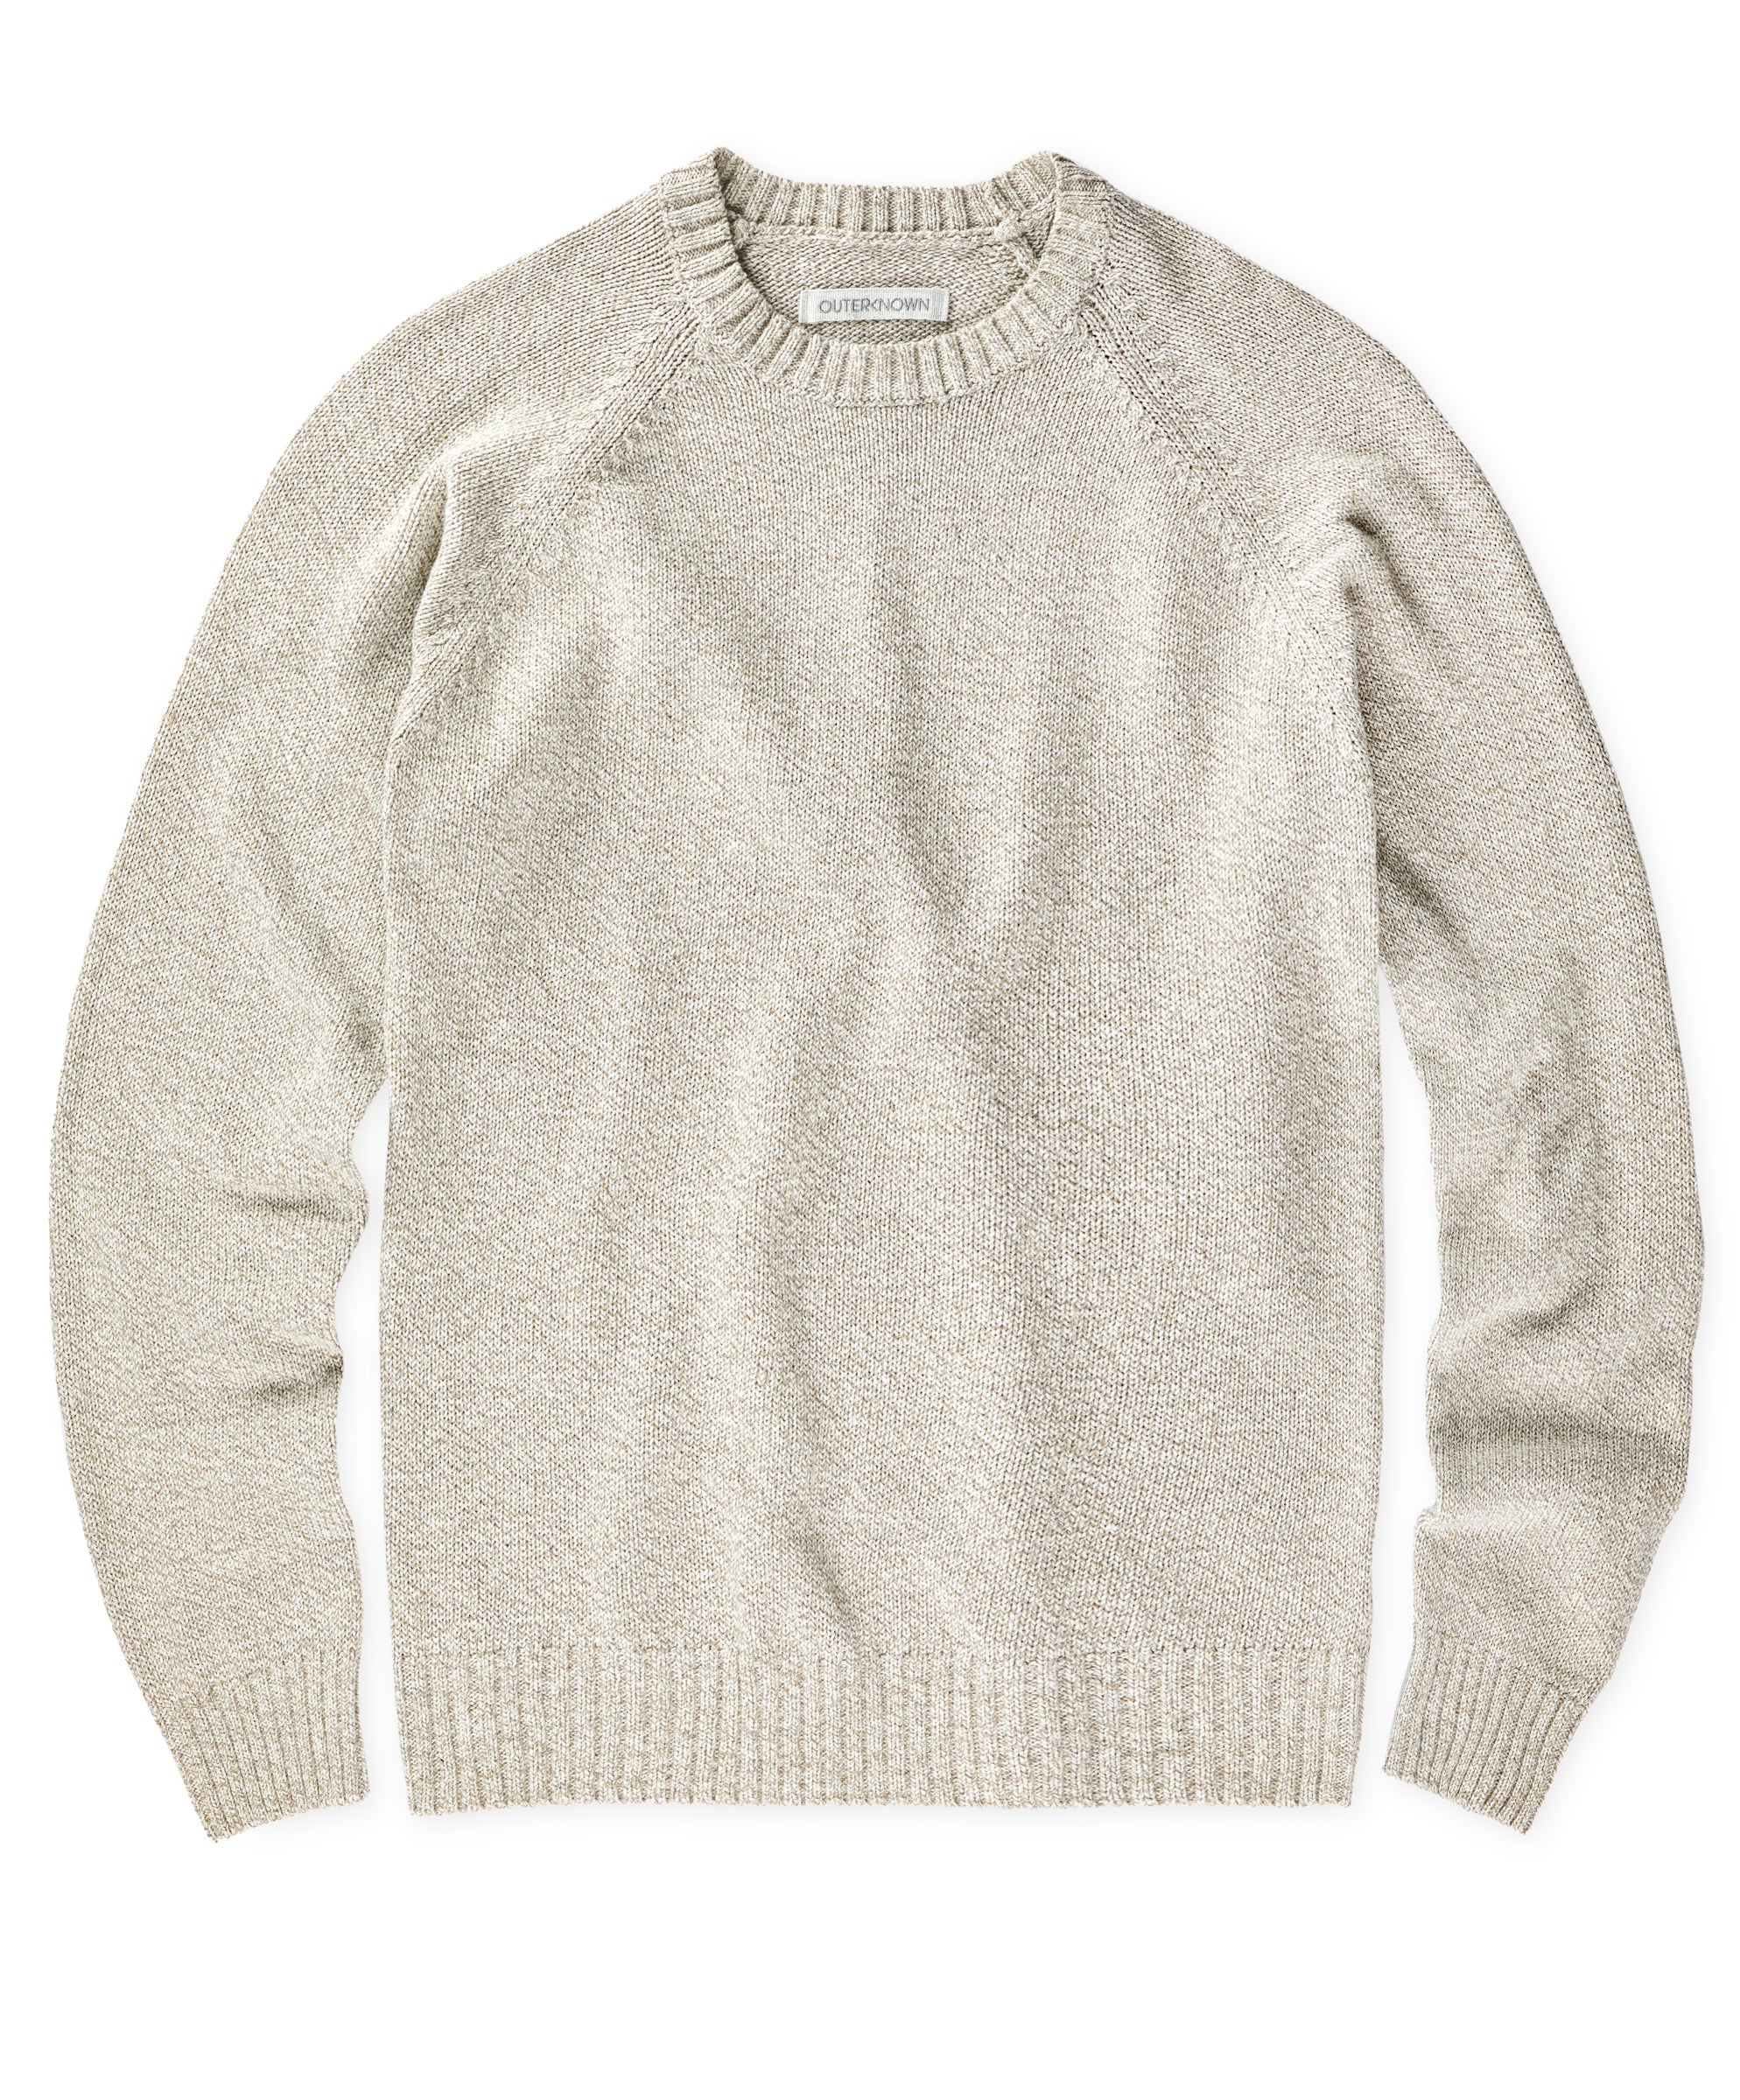 Hemisphere Sweater | Men's Sweaters | Outerknown